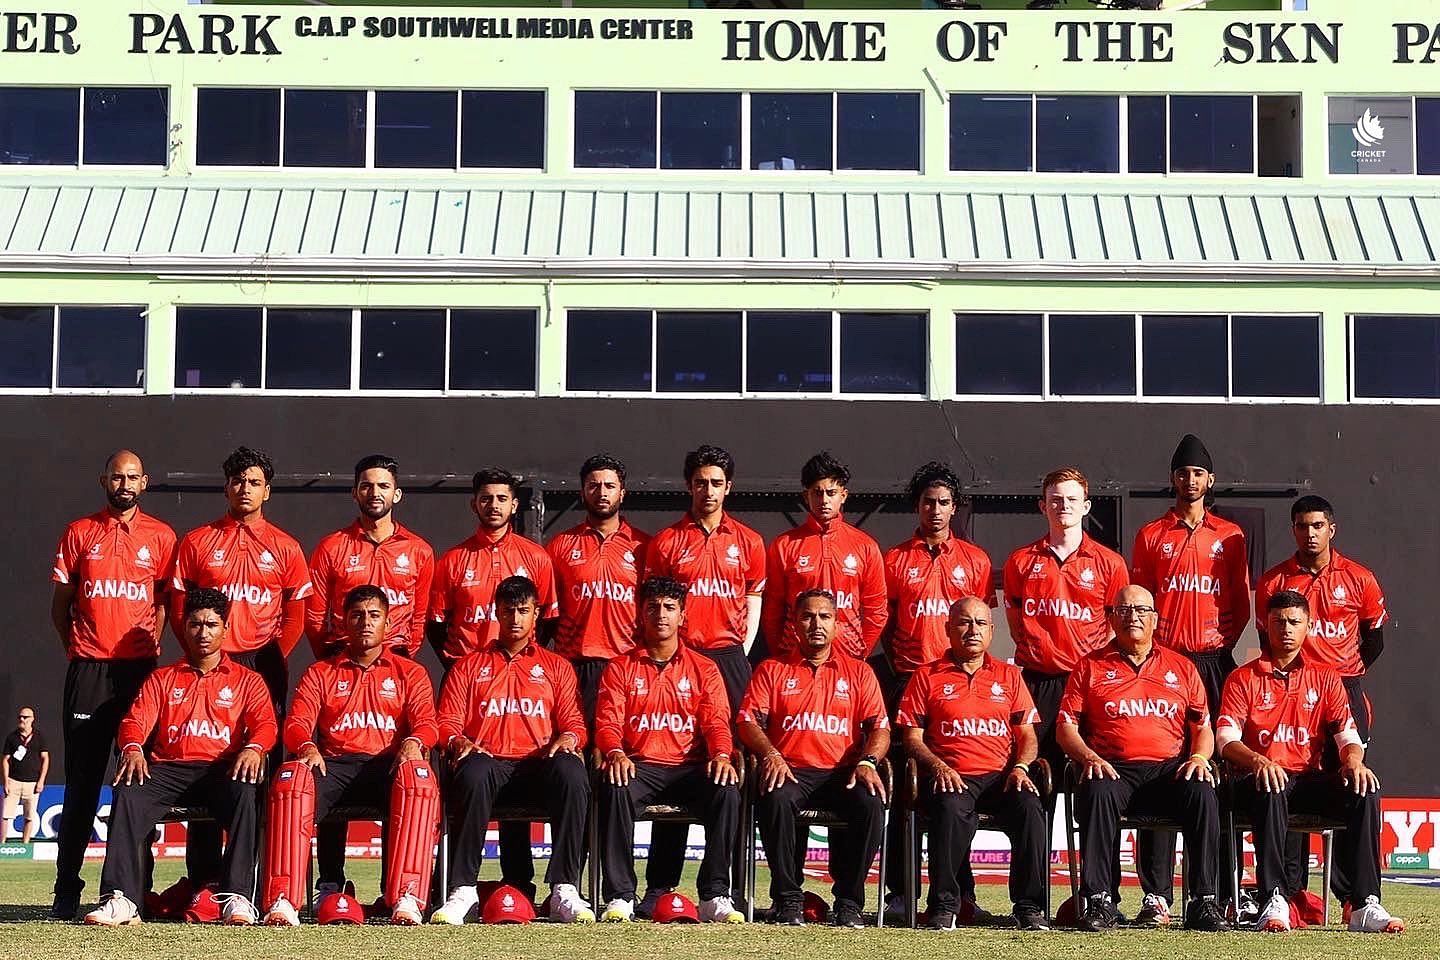 Canada Cricket Team striking a pose